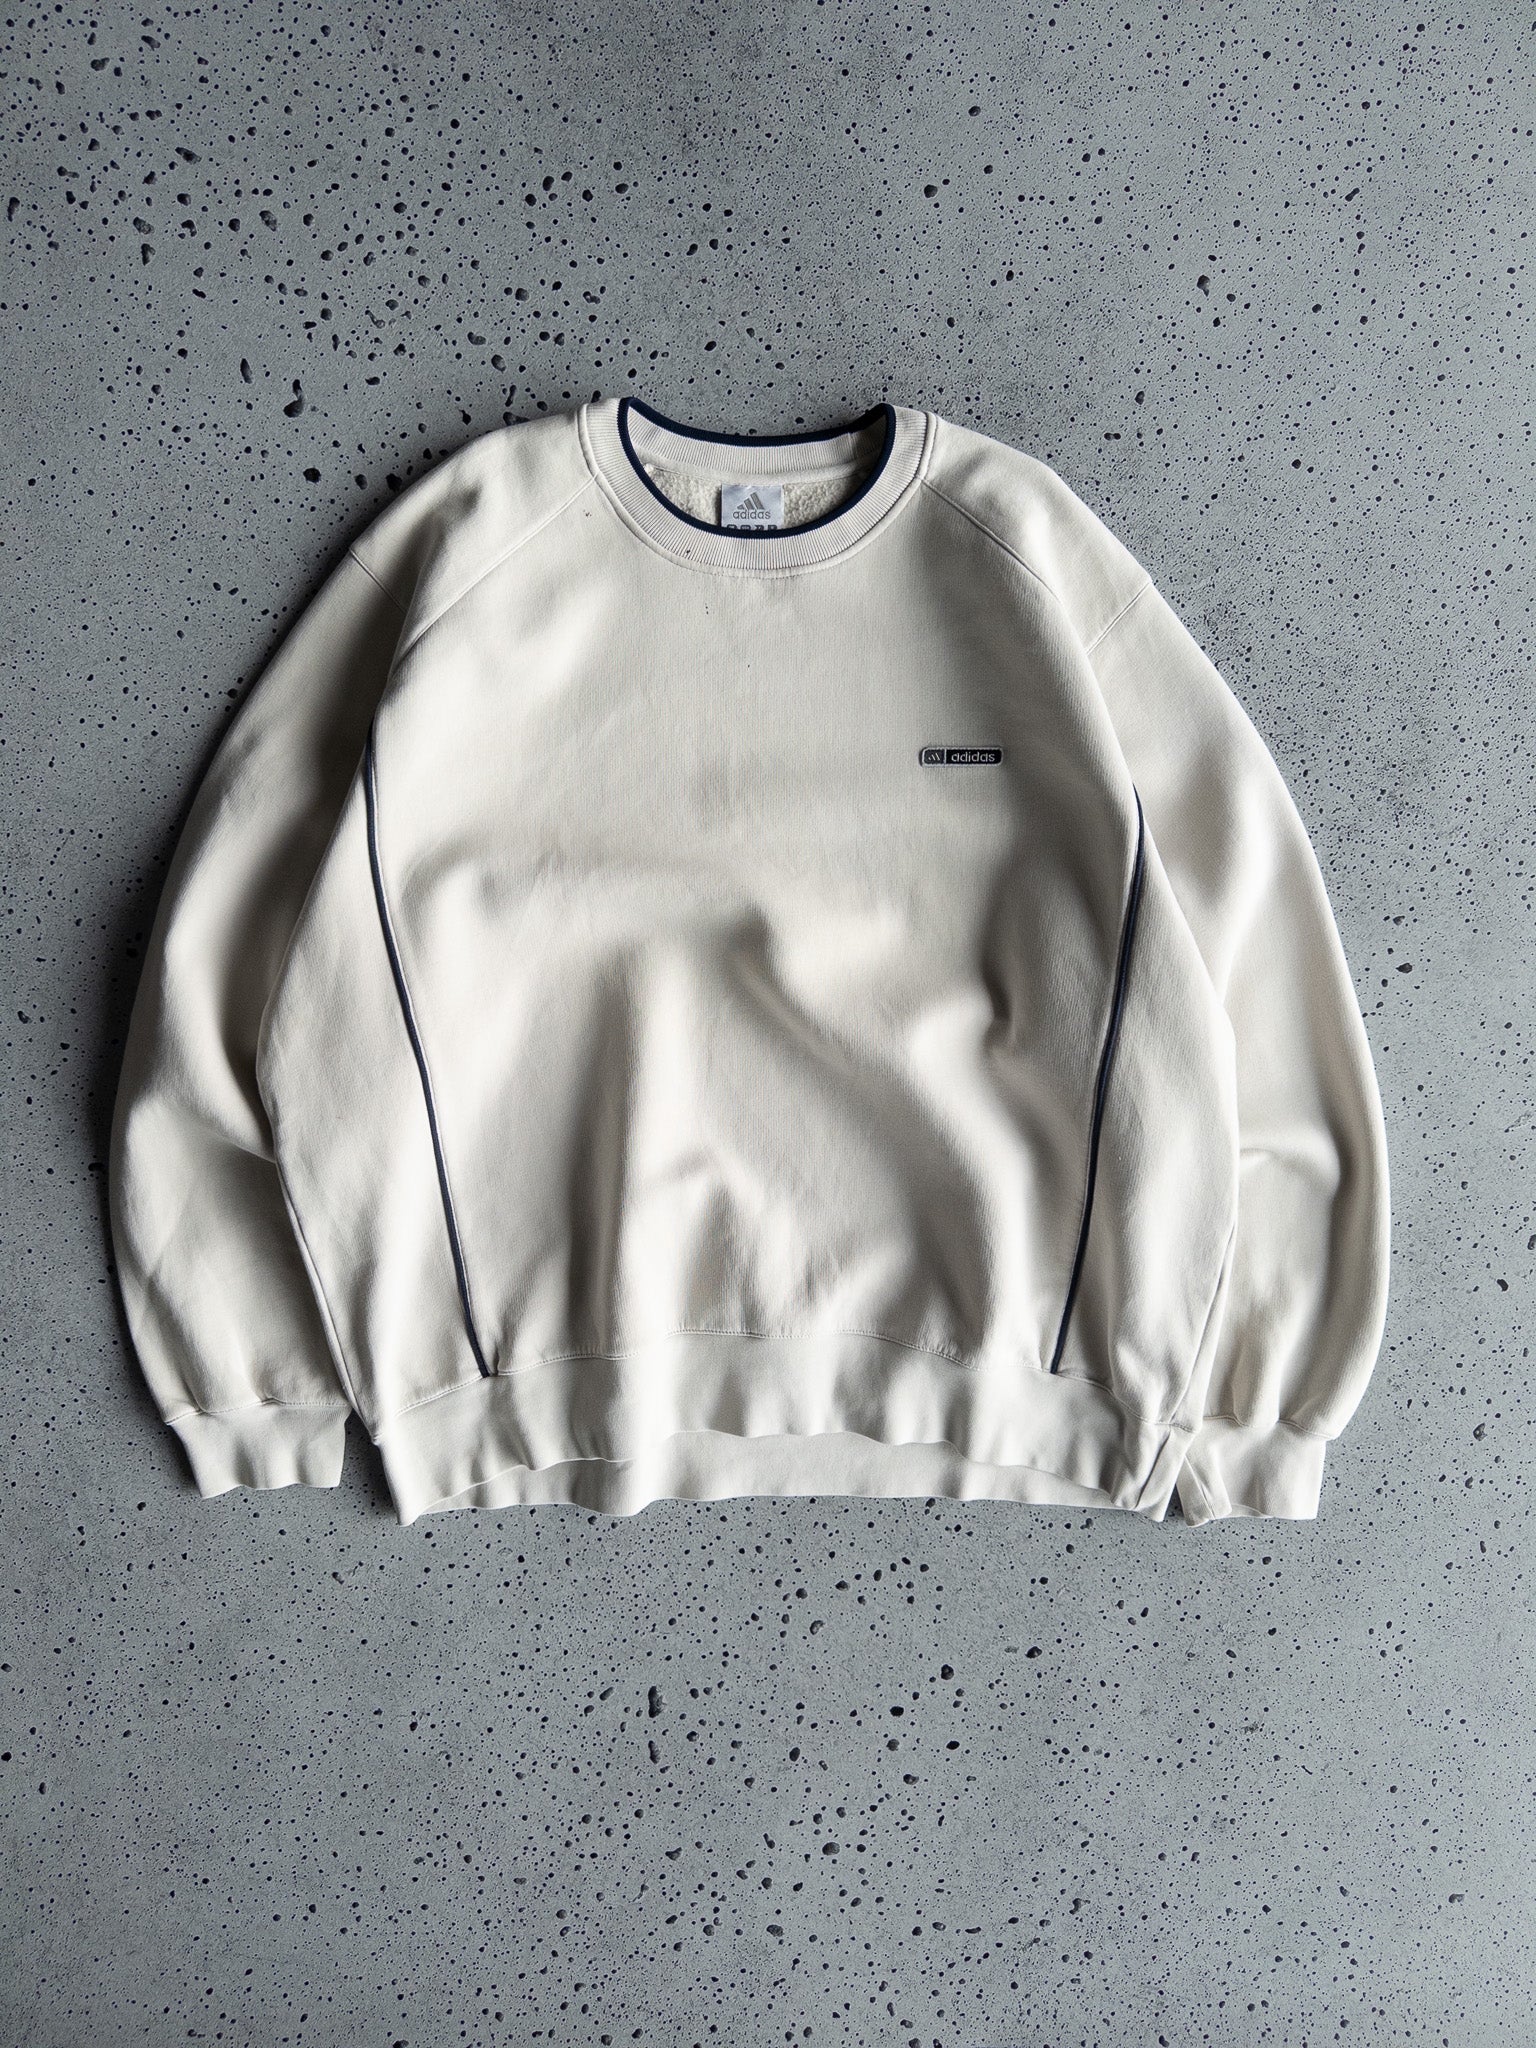 Vintage Adidas Sweatshirt (XXL)